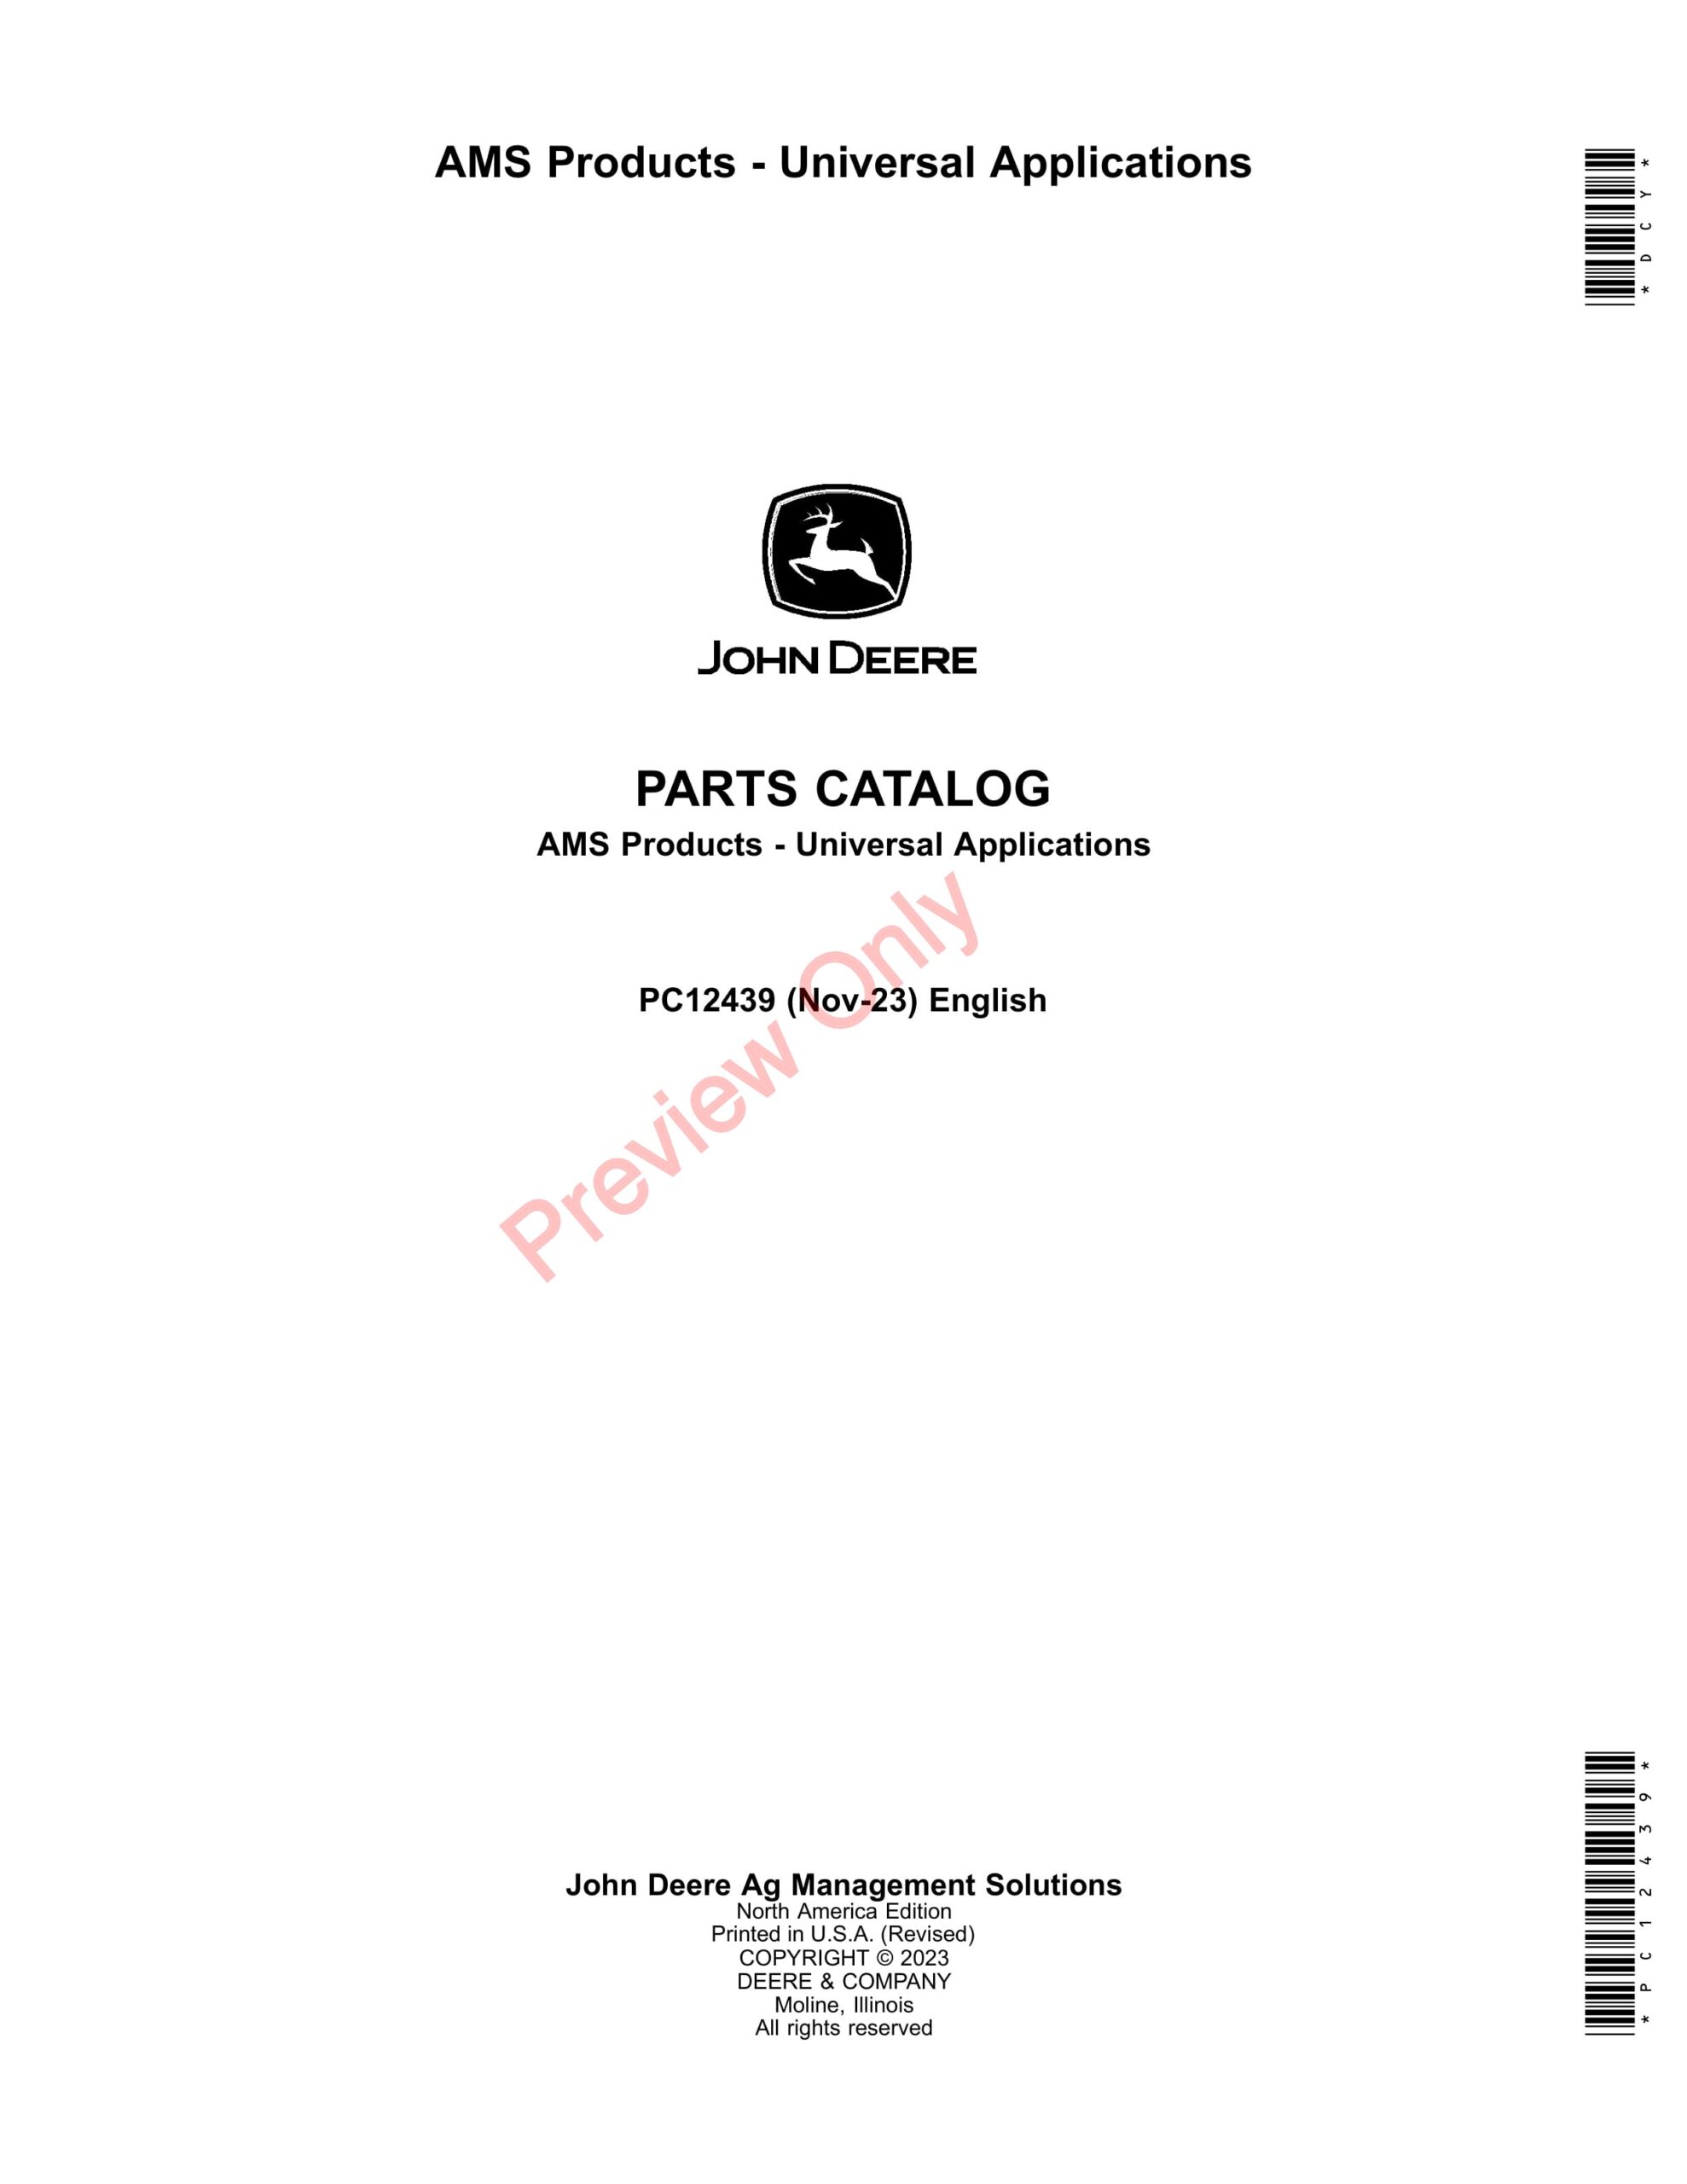 John Deere AMS Products – Universal Applications Parts Catalog PC12439 28NOV23-1